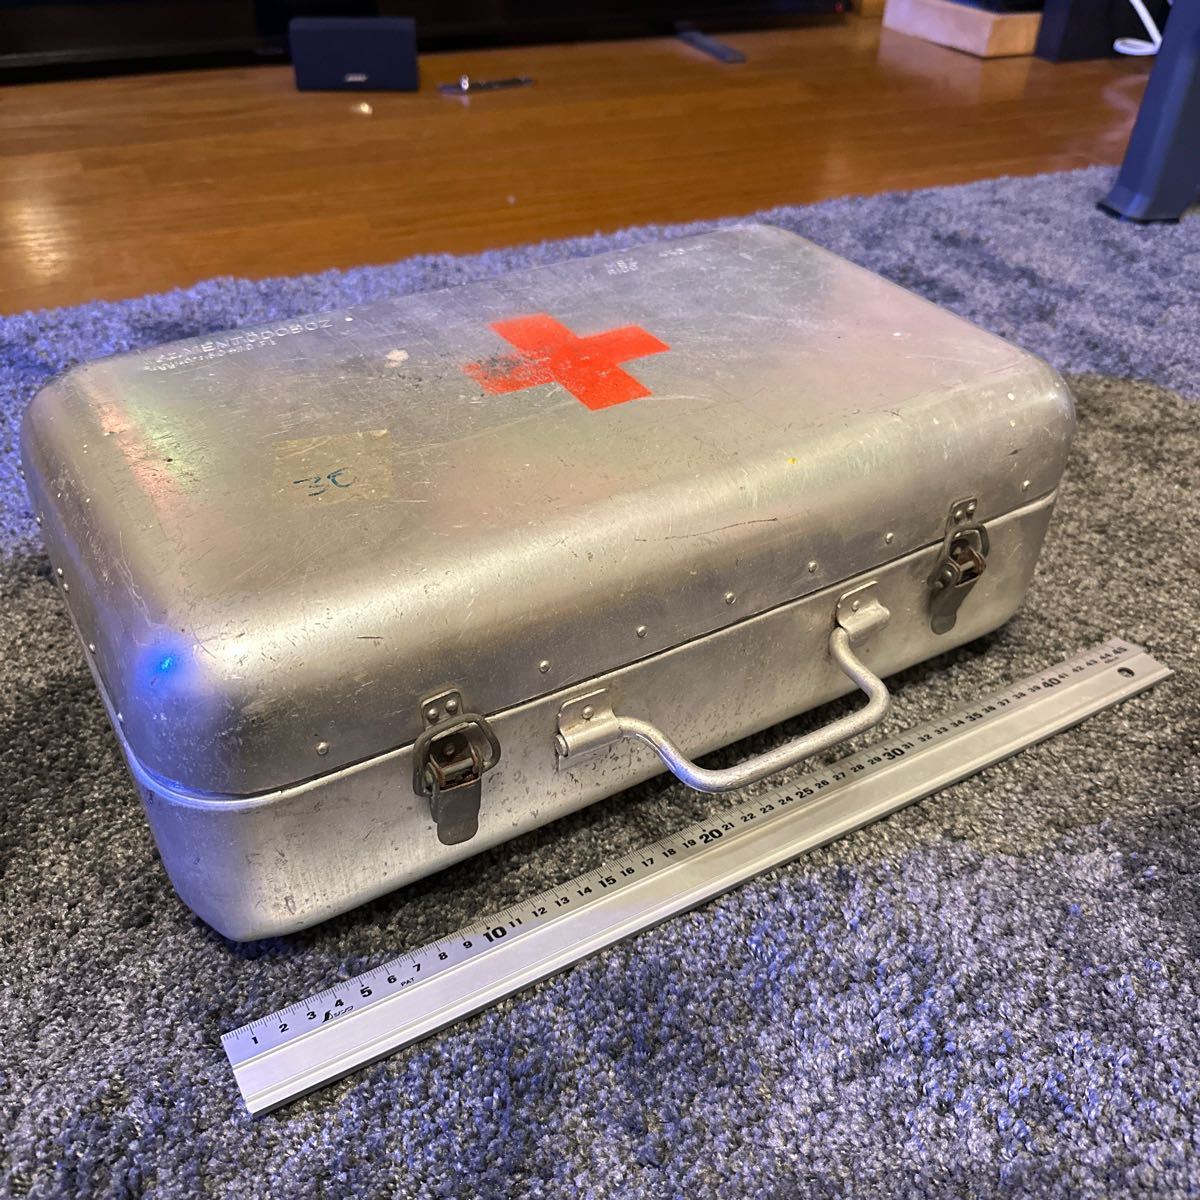  aluminium container box first-aid kit first aid army trunk tool box tackle box Zero is li